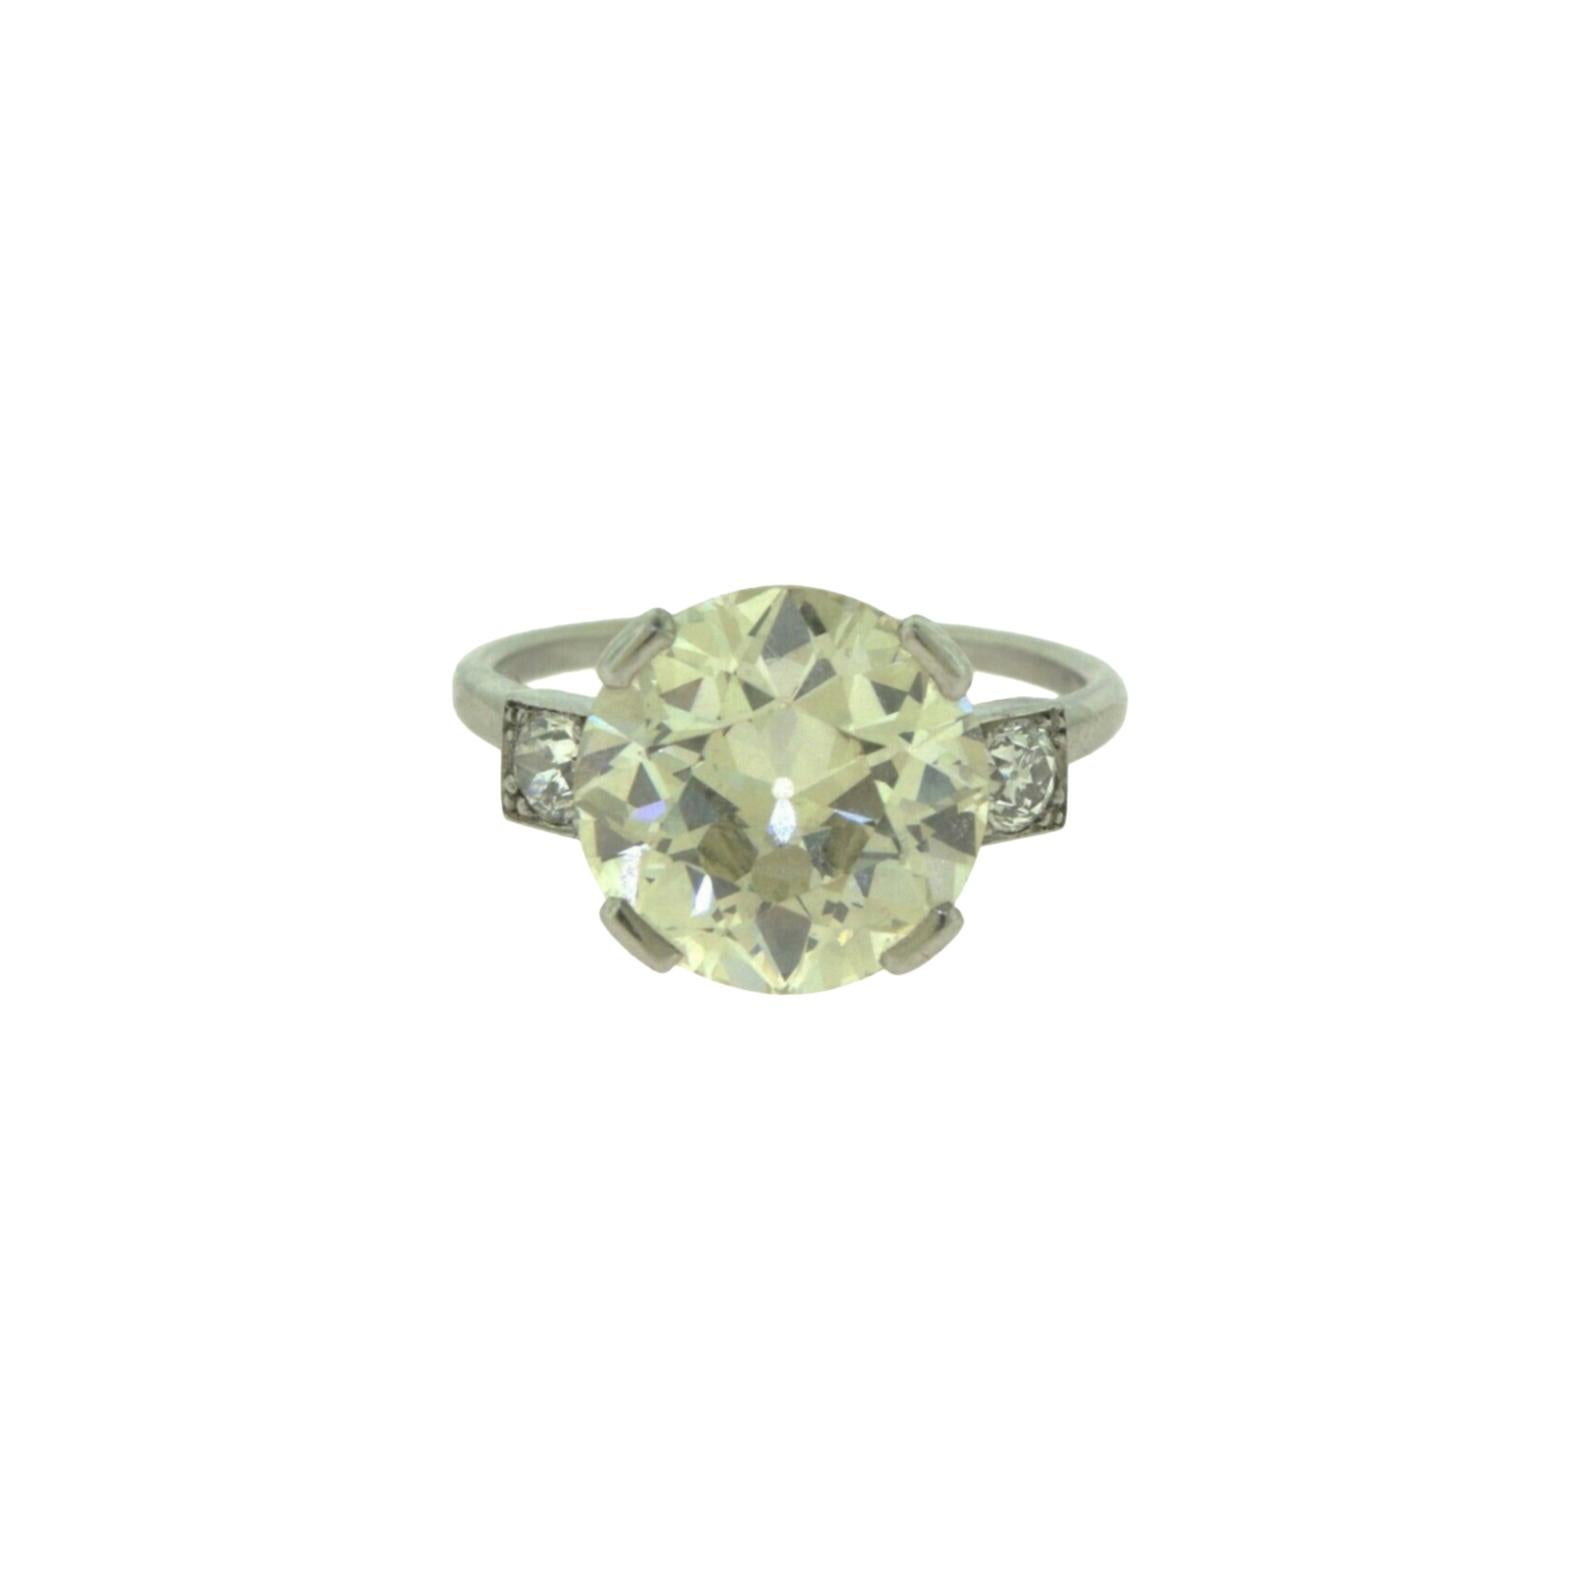 Cartier 5.15 Carat Round Diamond Engagement Ring, 1920s Art Deco